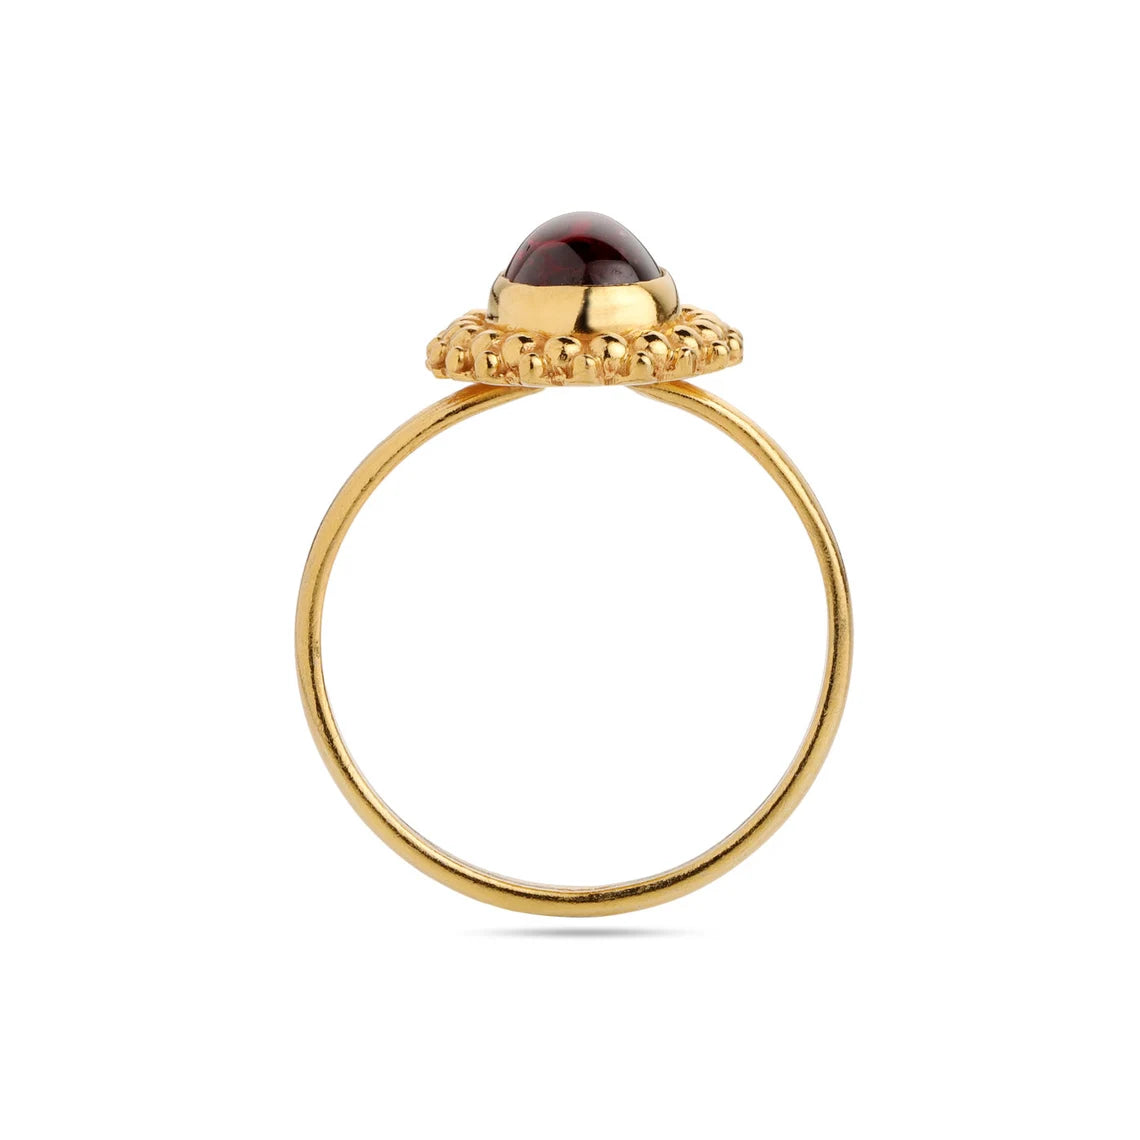 Gold Garnet Ring, Oval Garnet Ring, Dainty Garnet Ring, Garnet Solitaire, January Birthstone